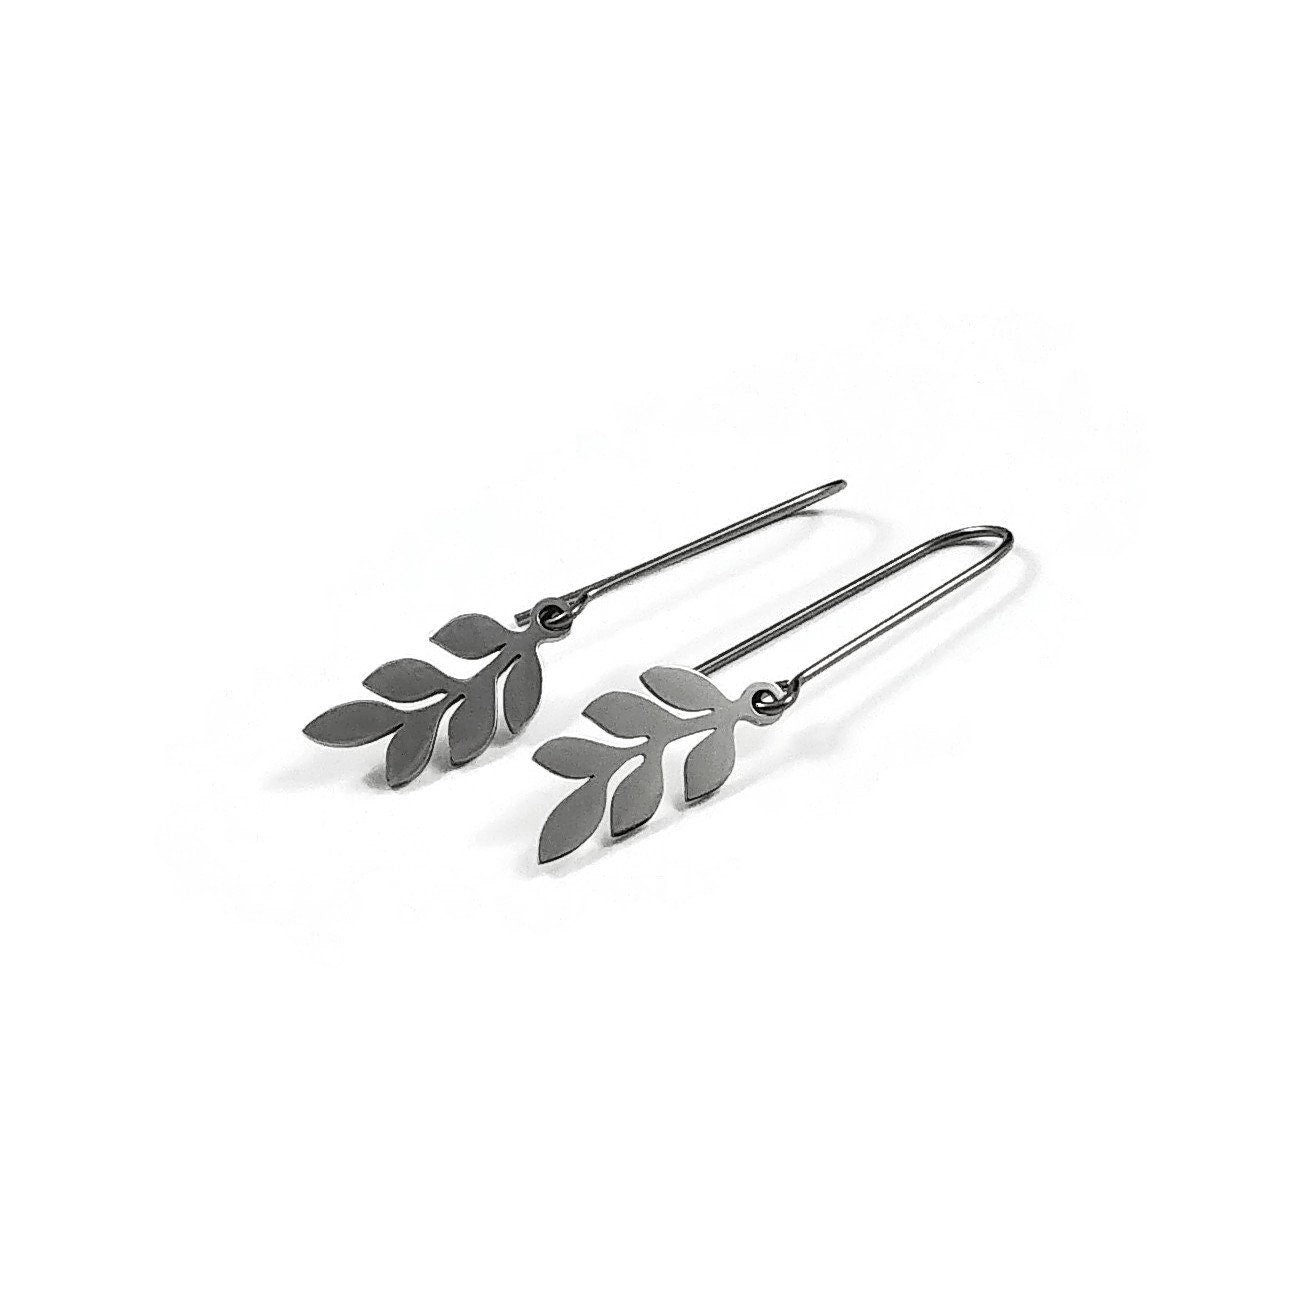 Minimalist botanical drop earrings, Dainty silver branch earrings, Pure niobium threader for sensitive ears